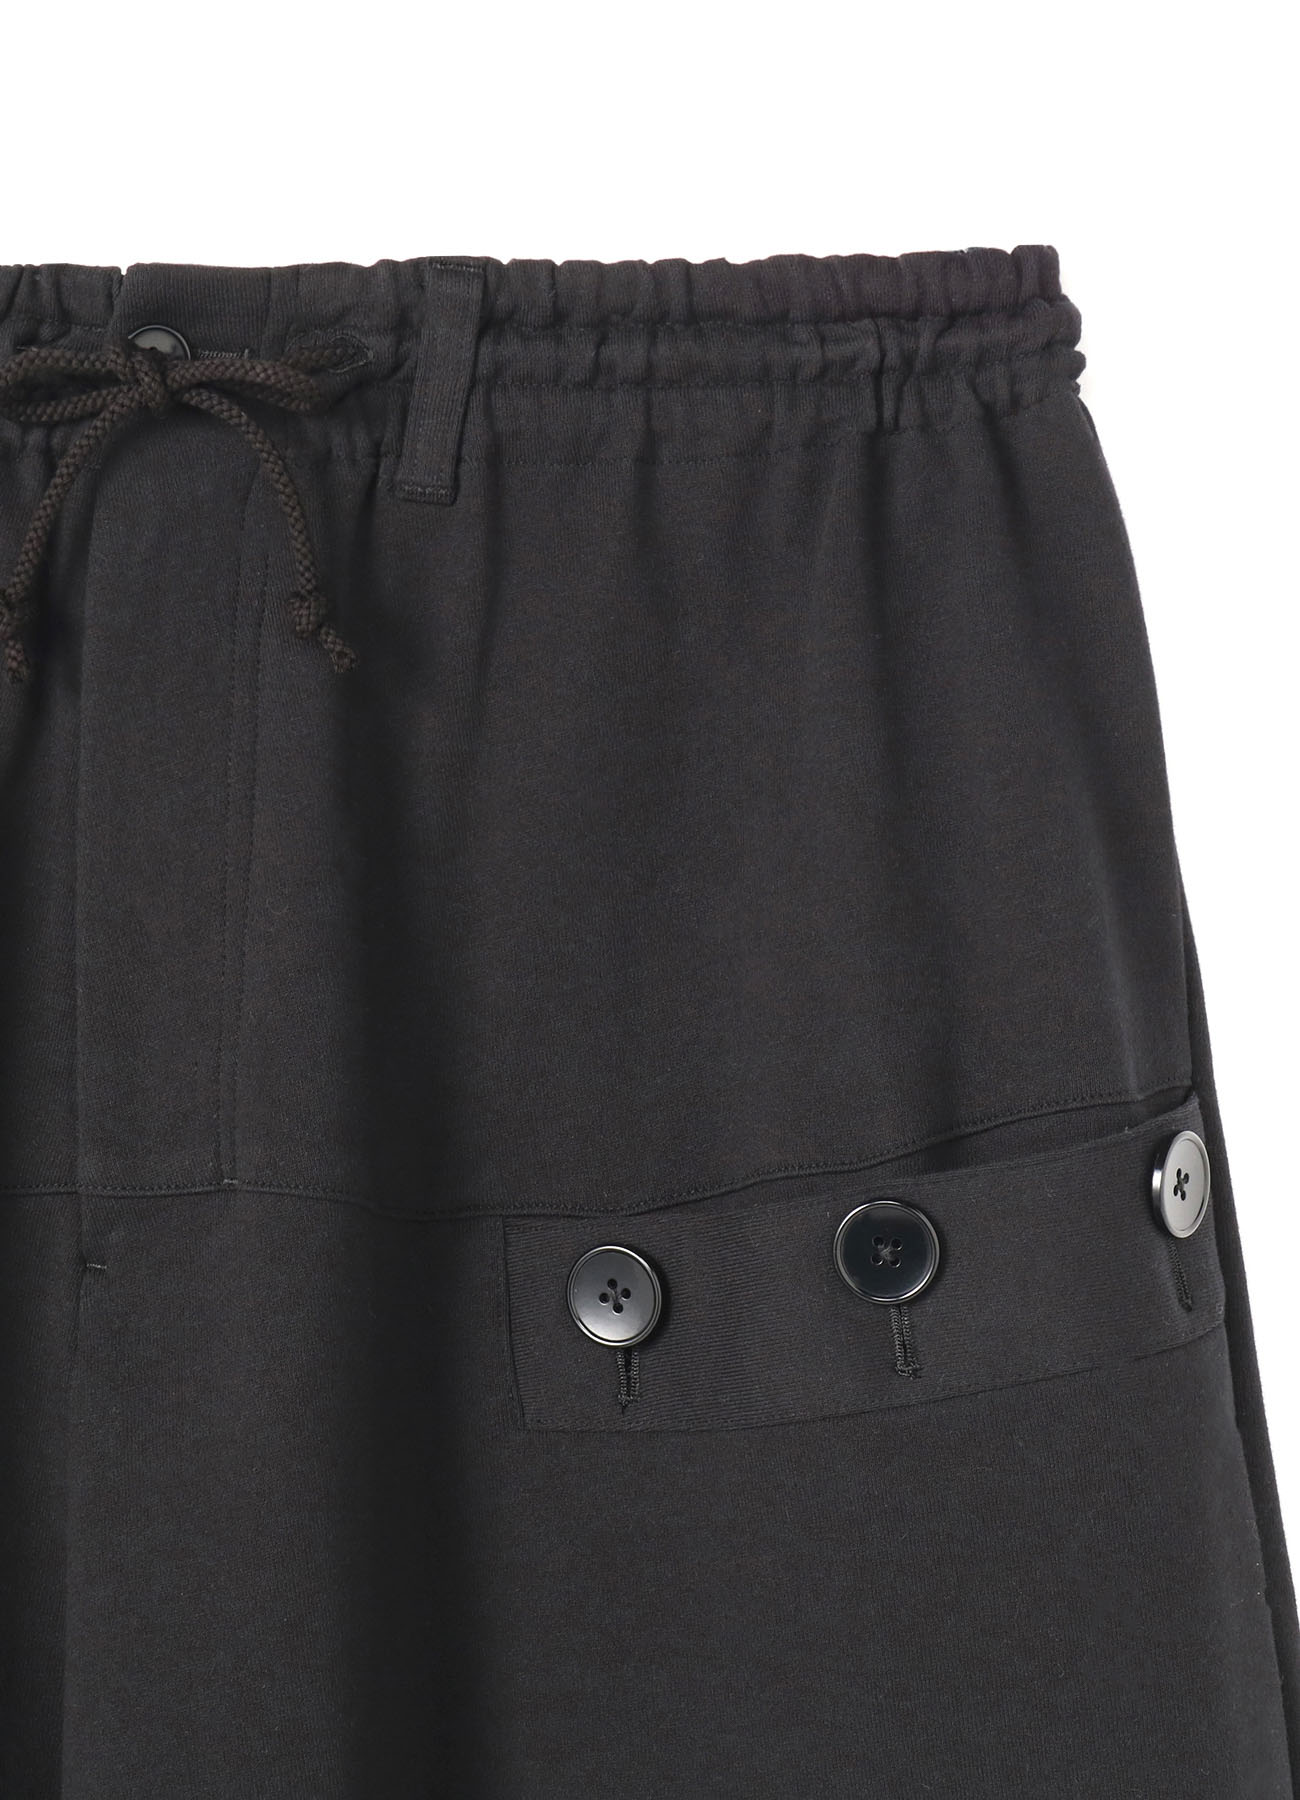 Mini Fleece Pile Button drape sarouel pants